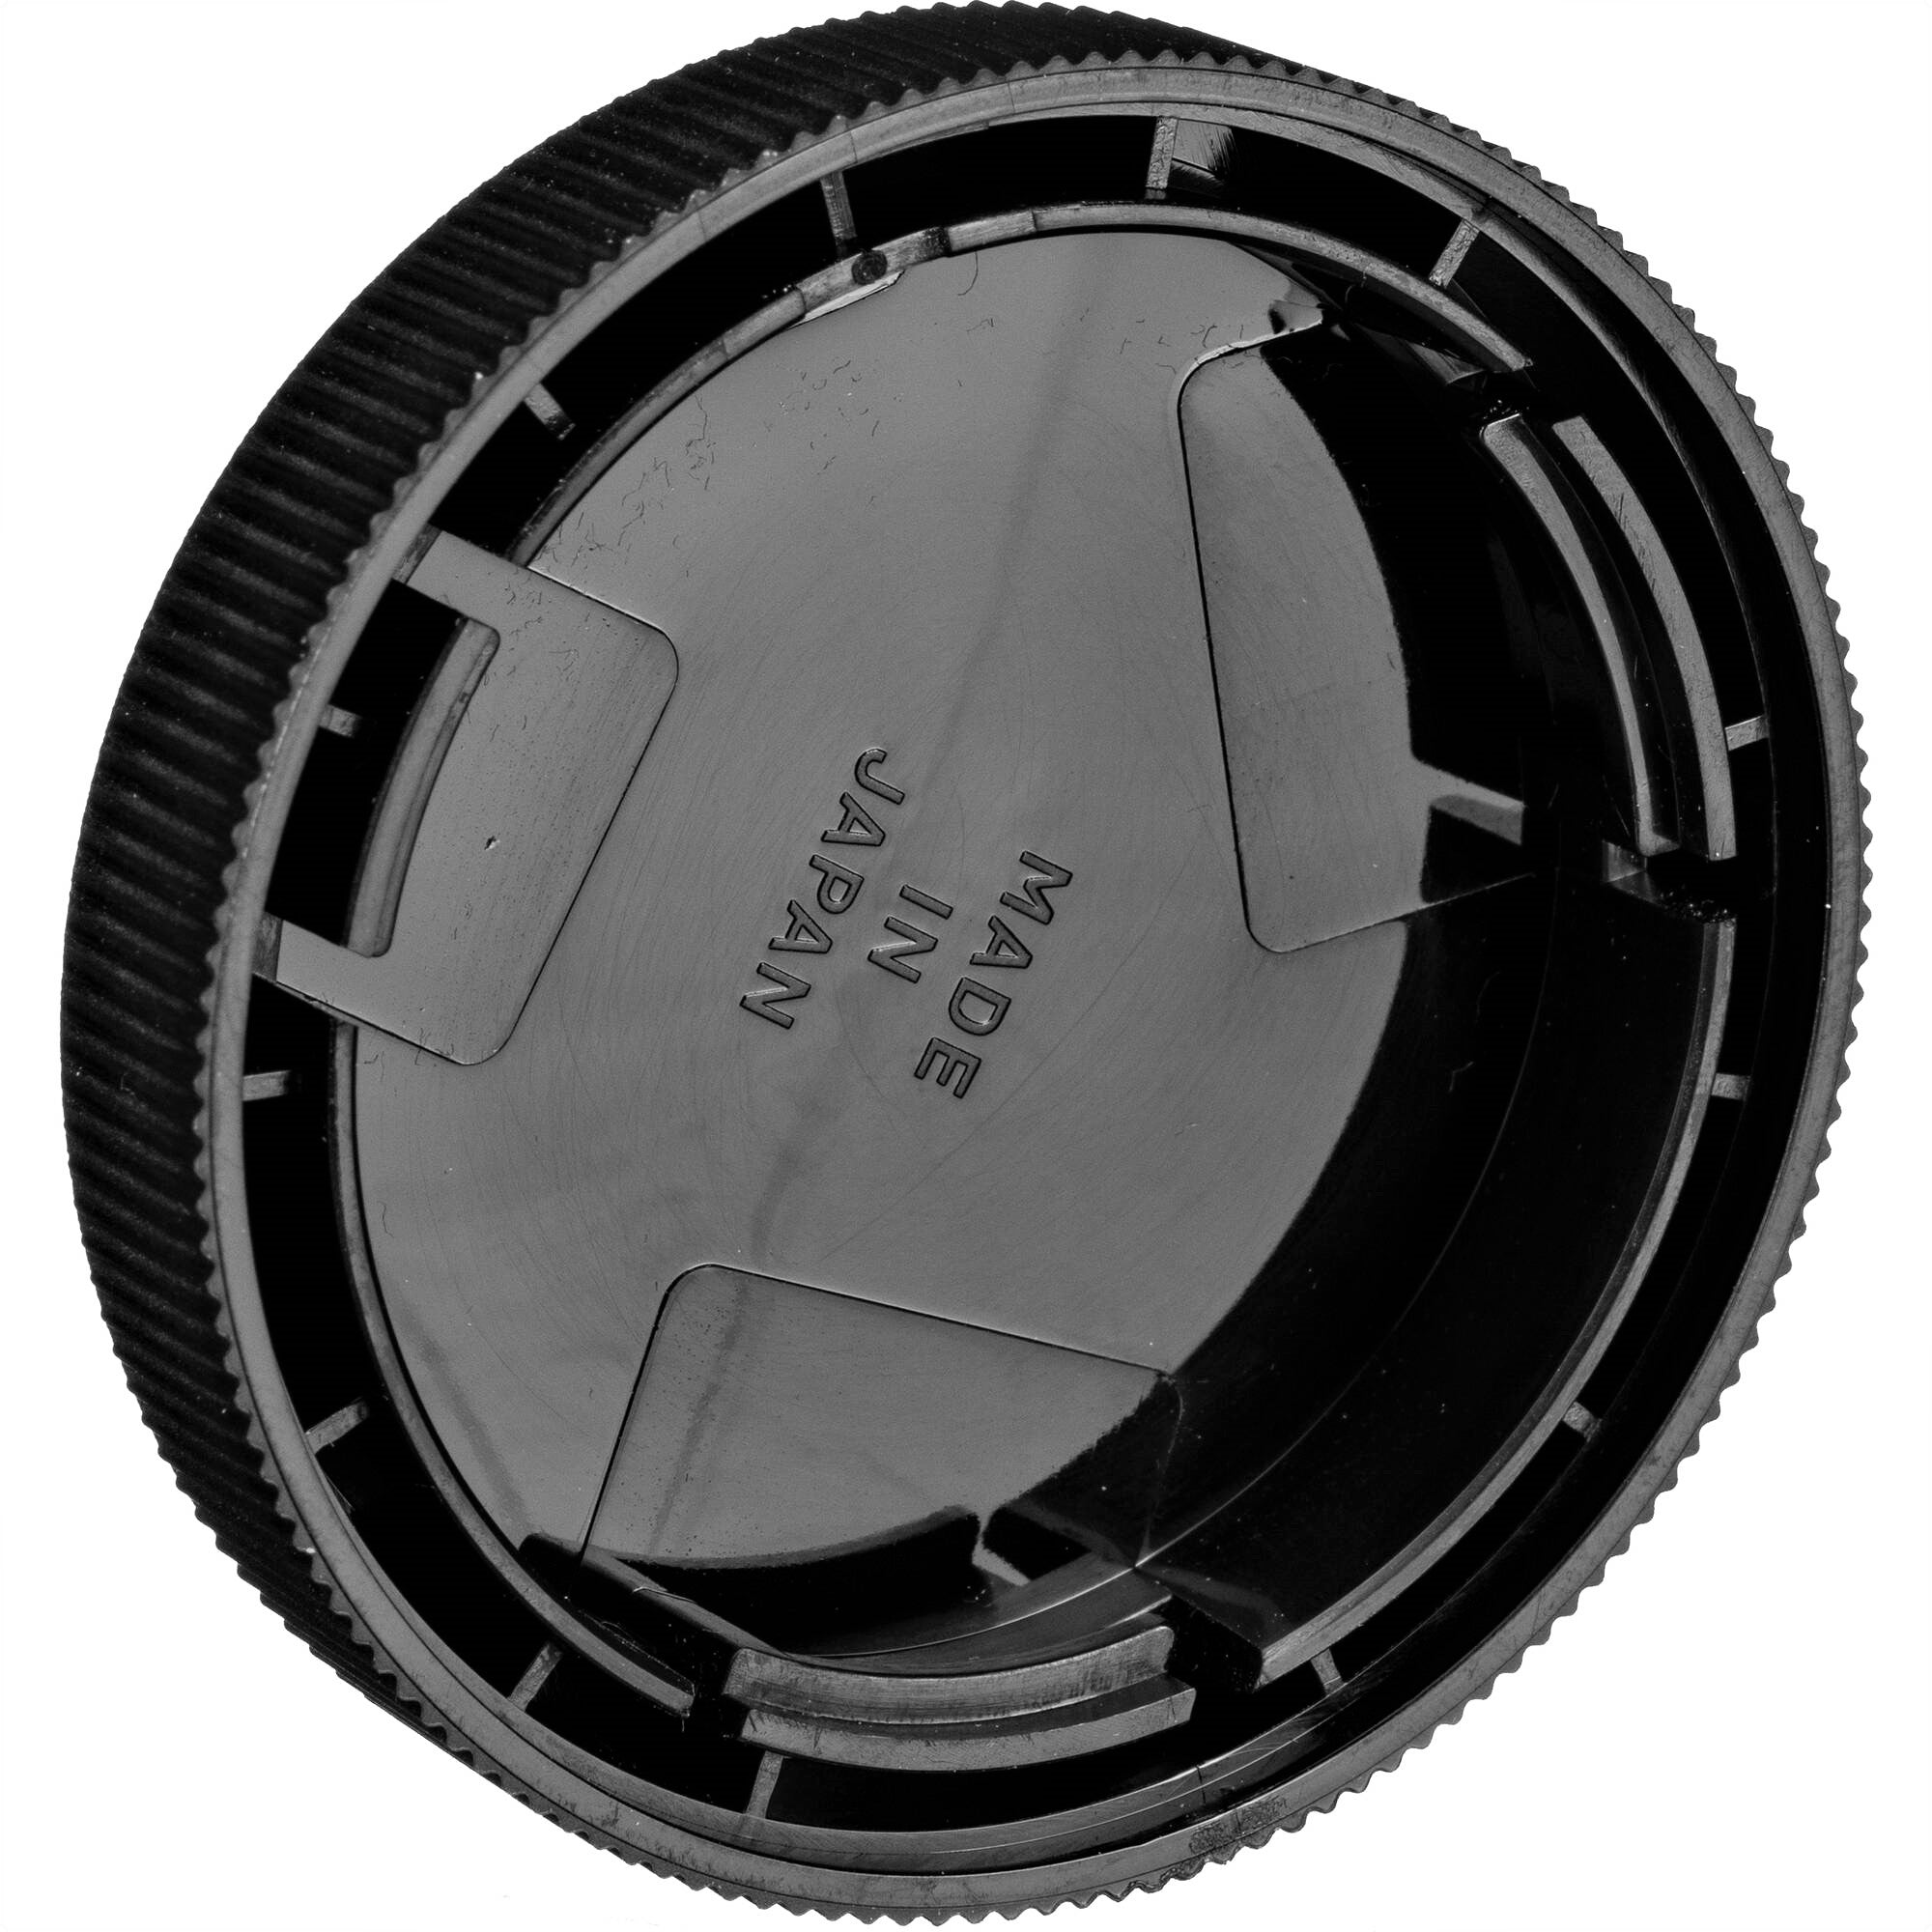 Sigma LCR II Rear Lens Cap